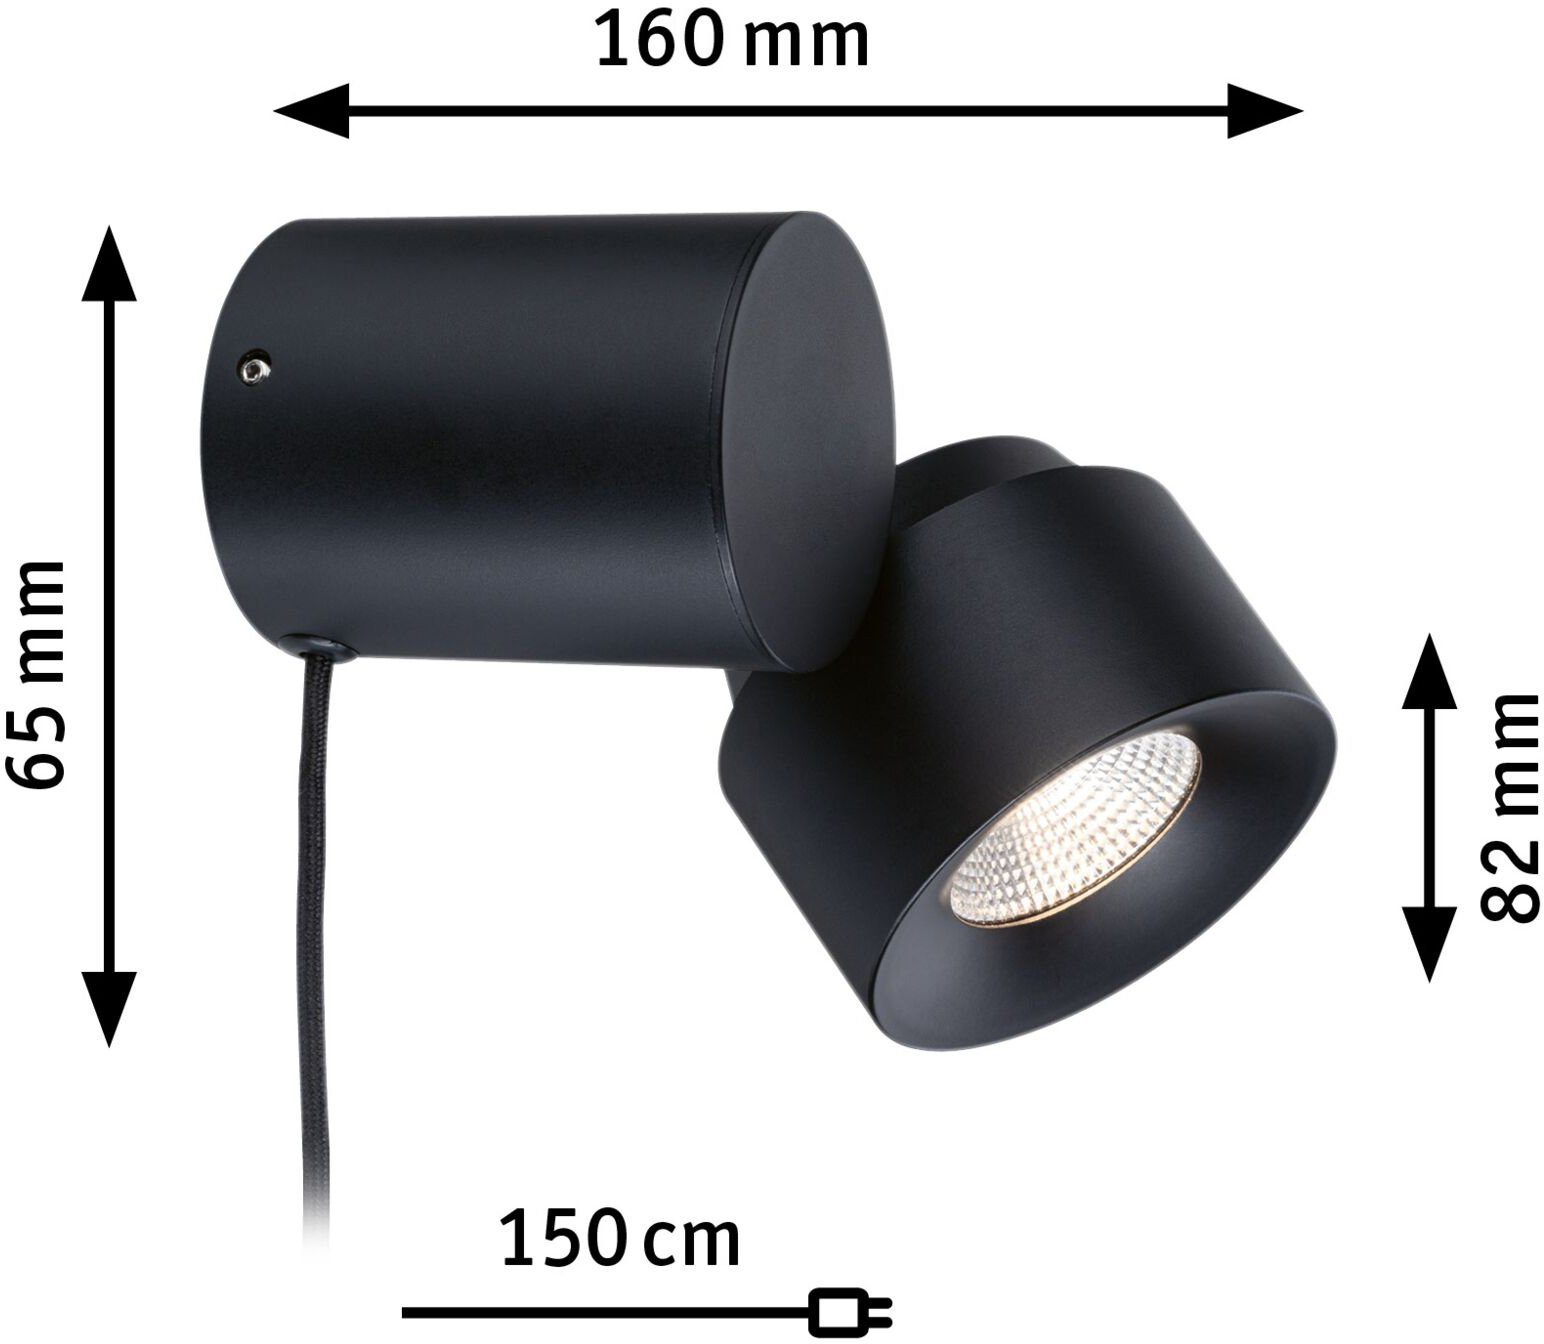 Schwarz/Grau, Tischleuchte dimmbar, LED Pane, Metall fest Warmweiß, Paulmann LED, Puric integriert,